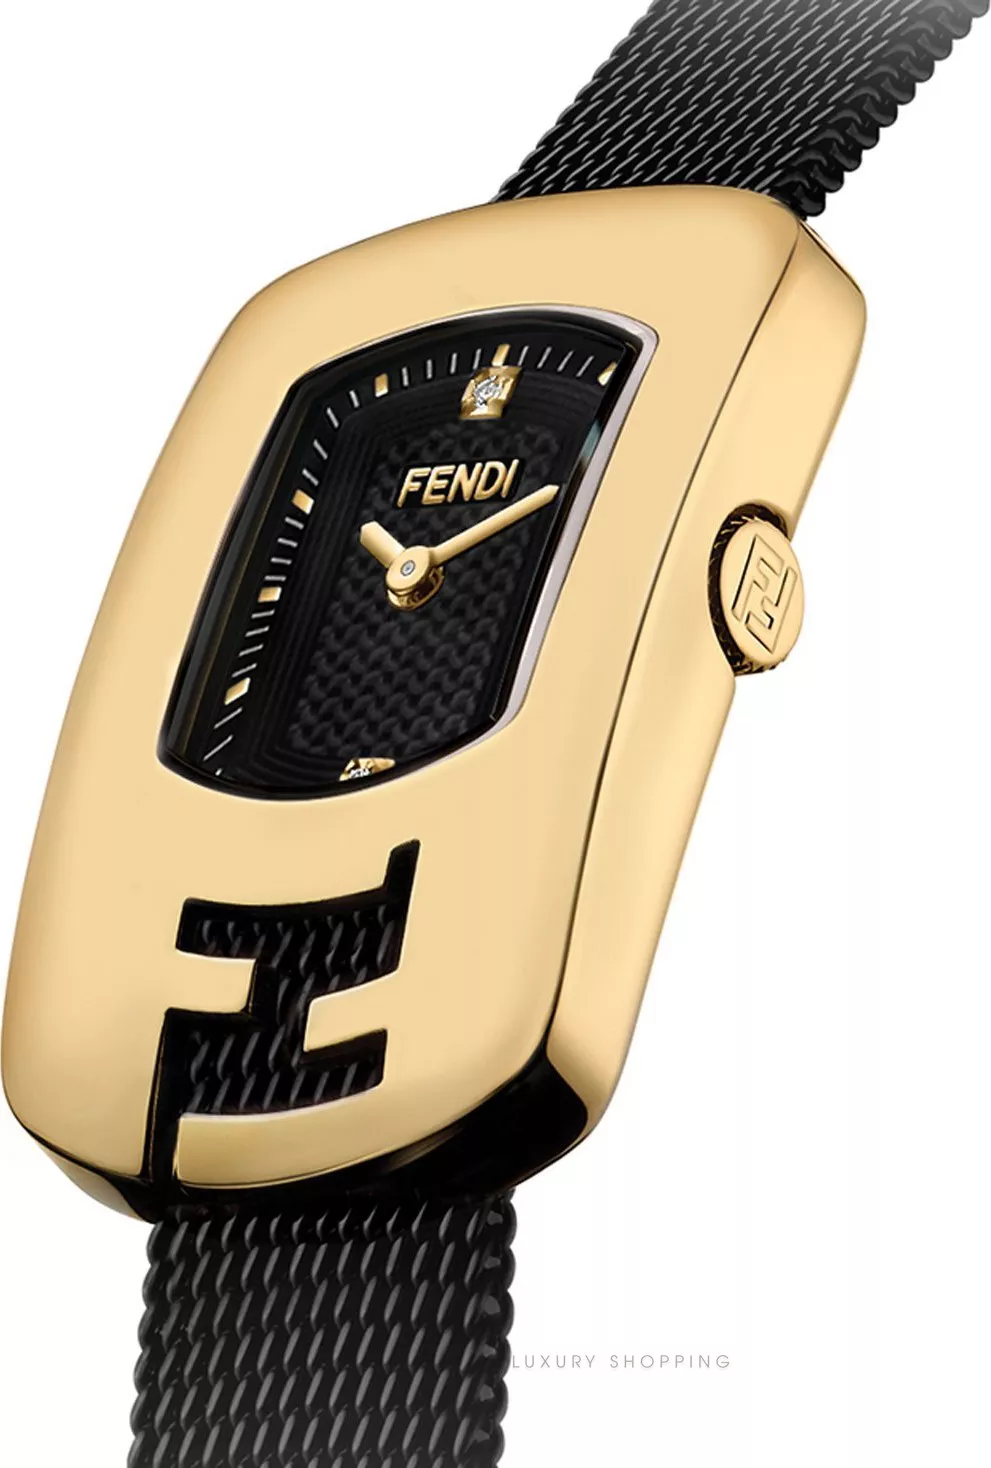  Fendi Chameleon F340421000D1 Watch 18x31mm  